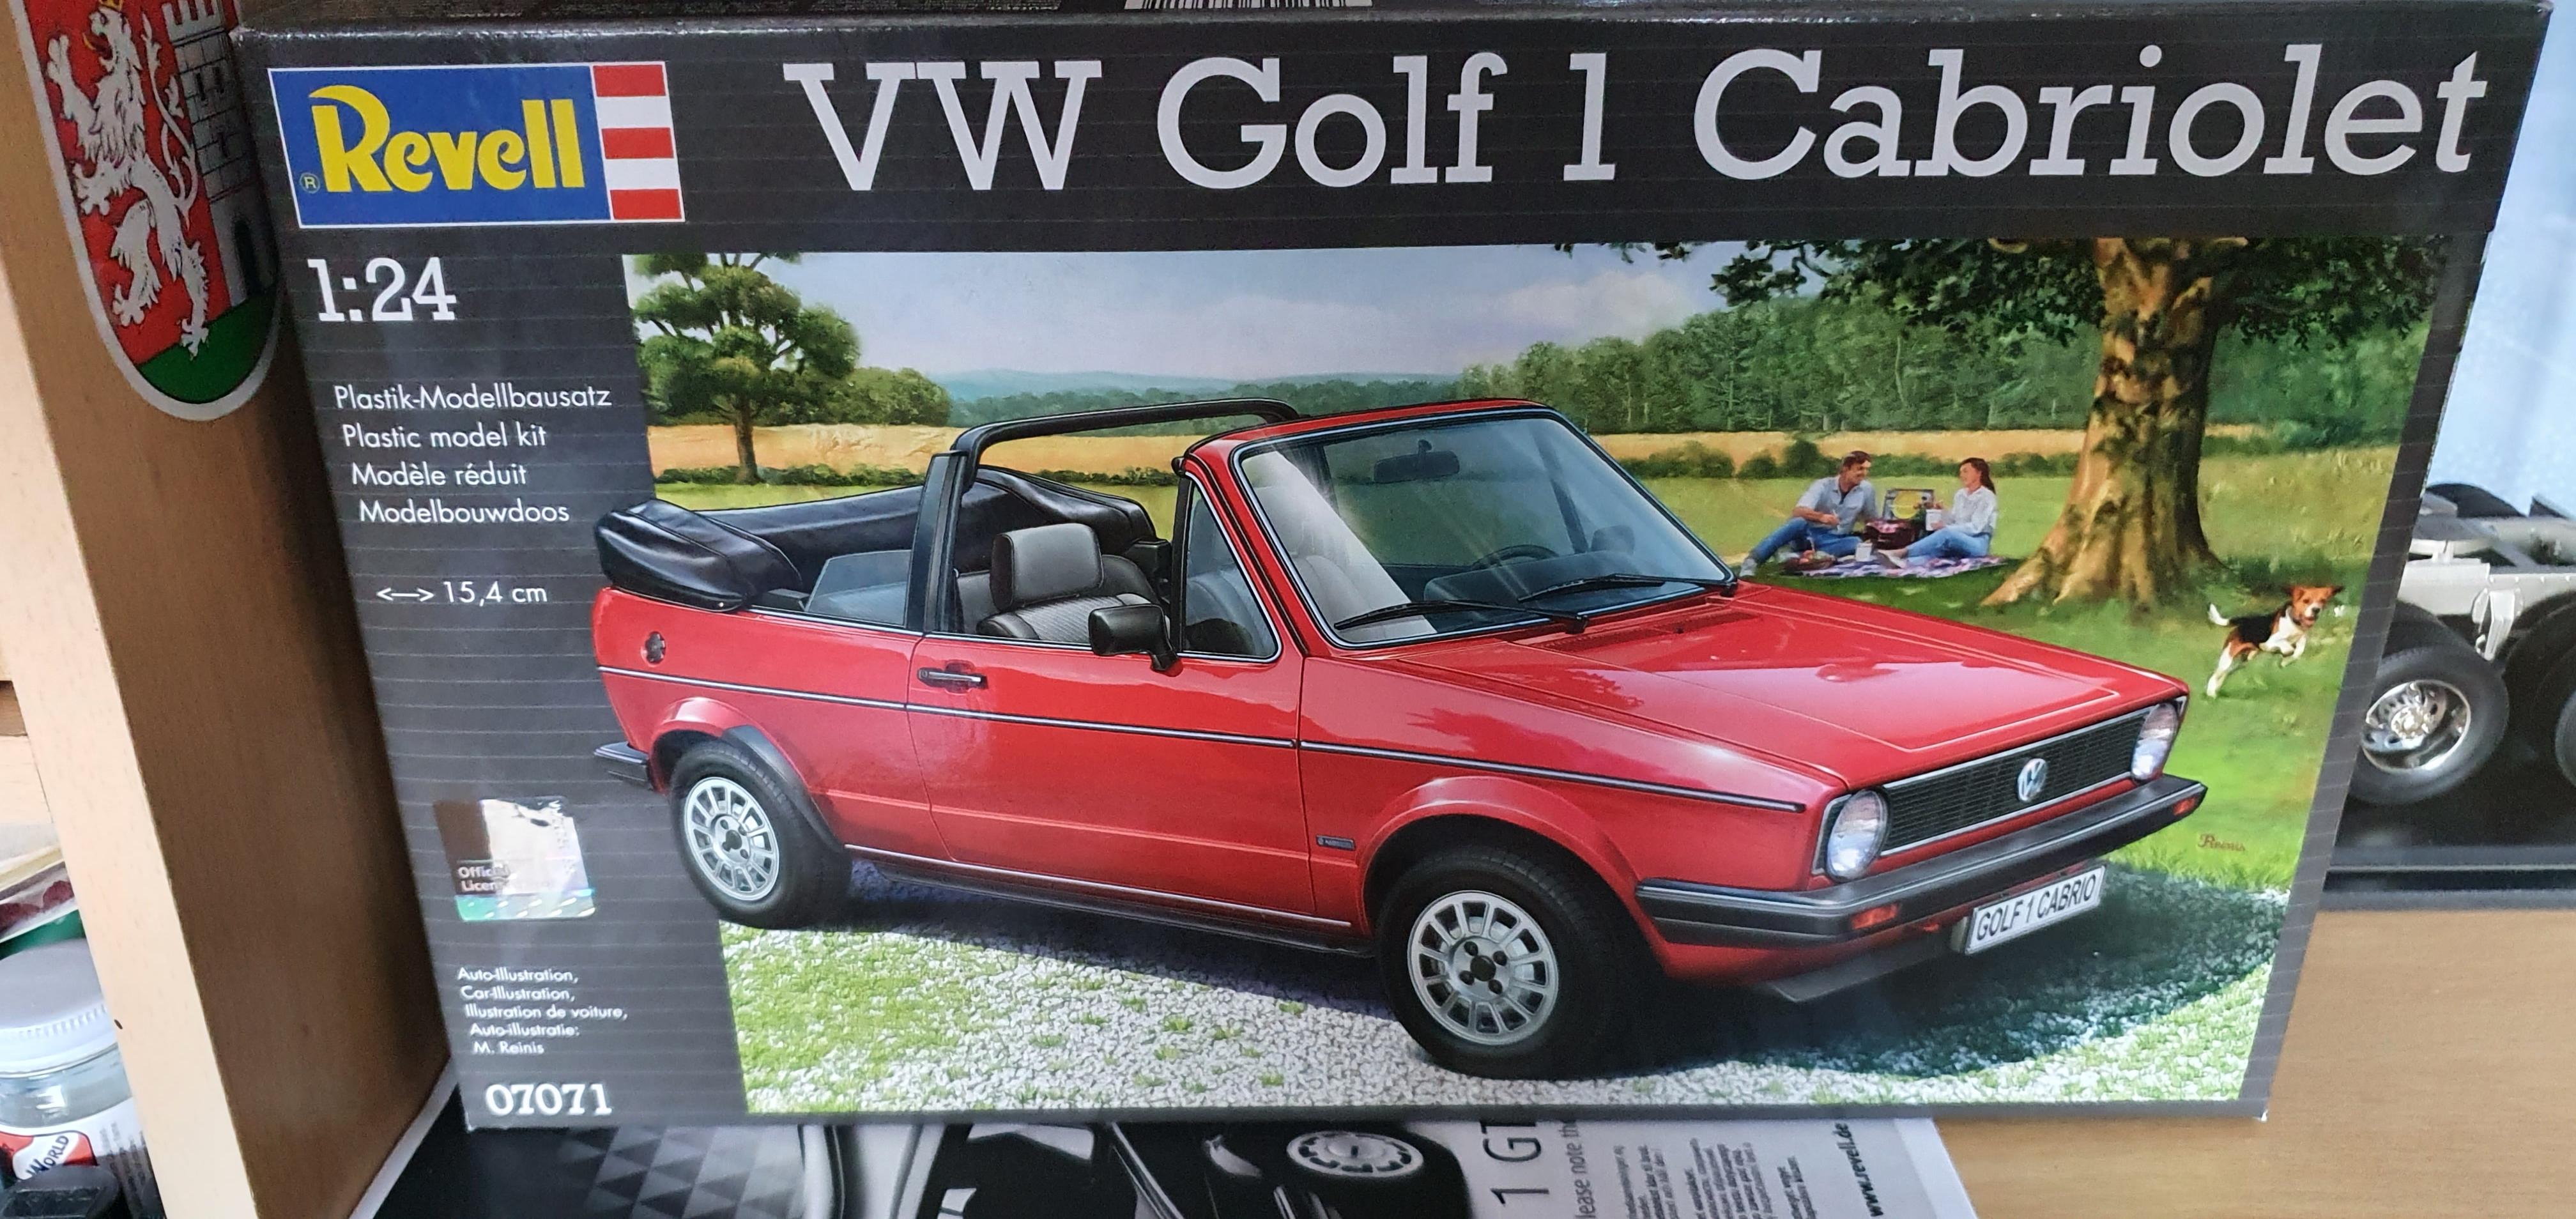 Revell Volkswagen Golf cabriolet - WIP: Model Cars - Model Cars Magazine  Forum